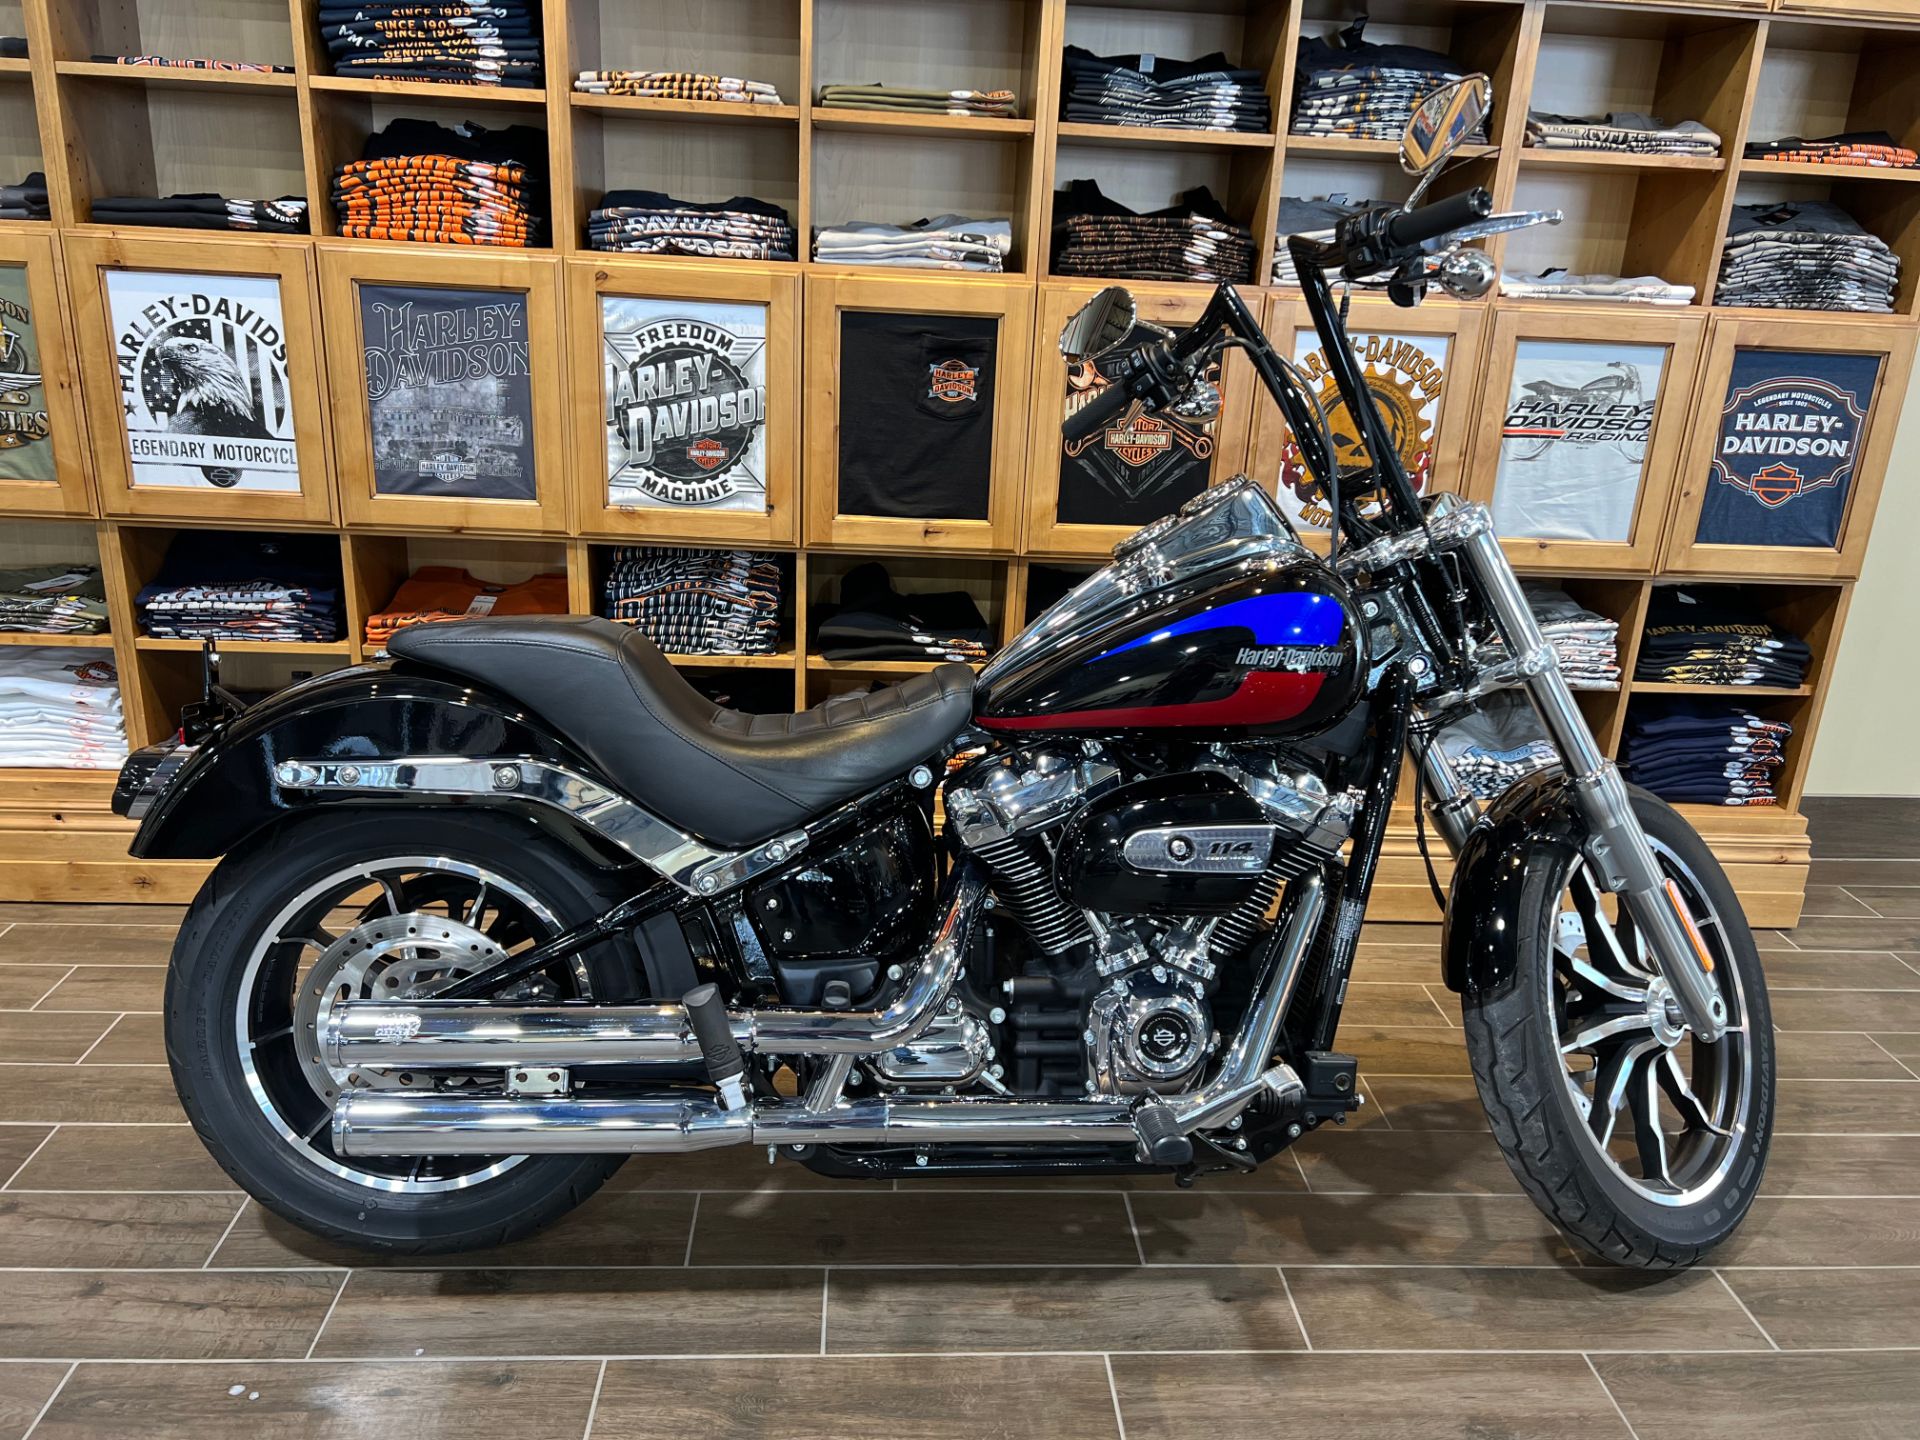 2020 Harley-Davidson Low Rider® in Logan, Utah - Photo 1